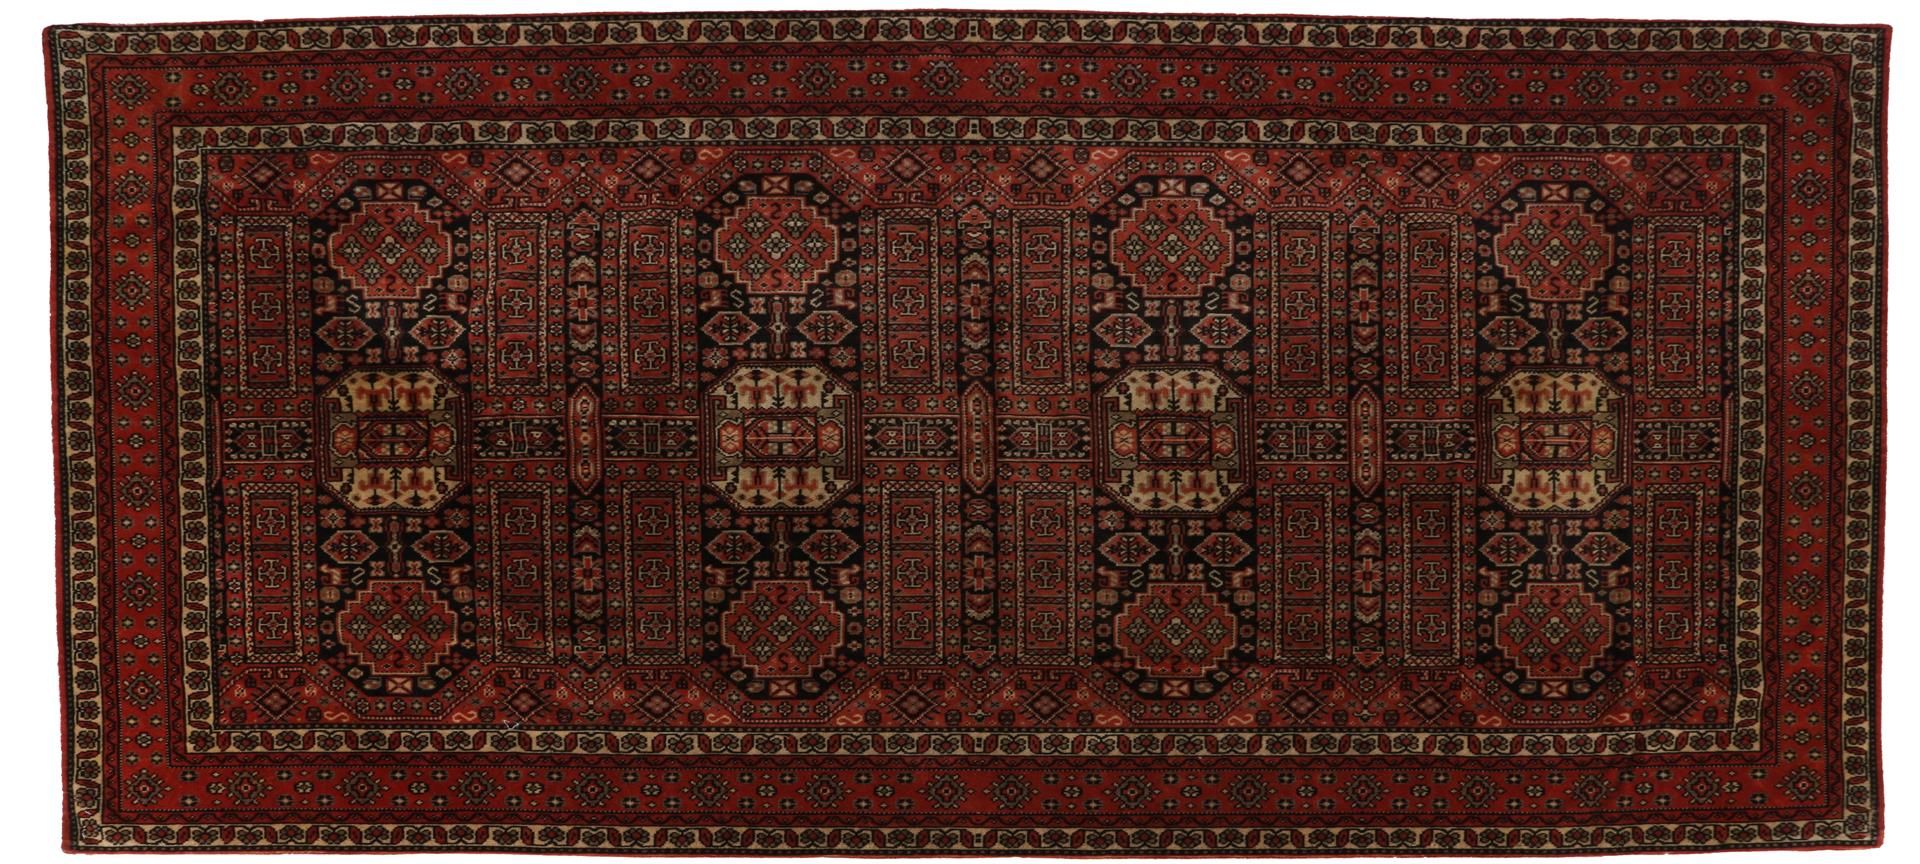 Carpet with oriental decor